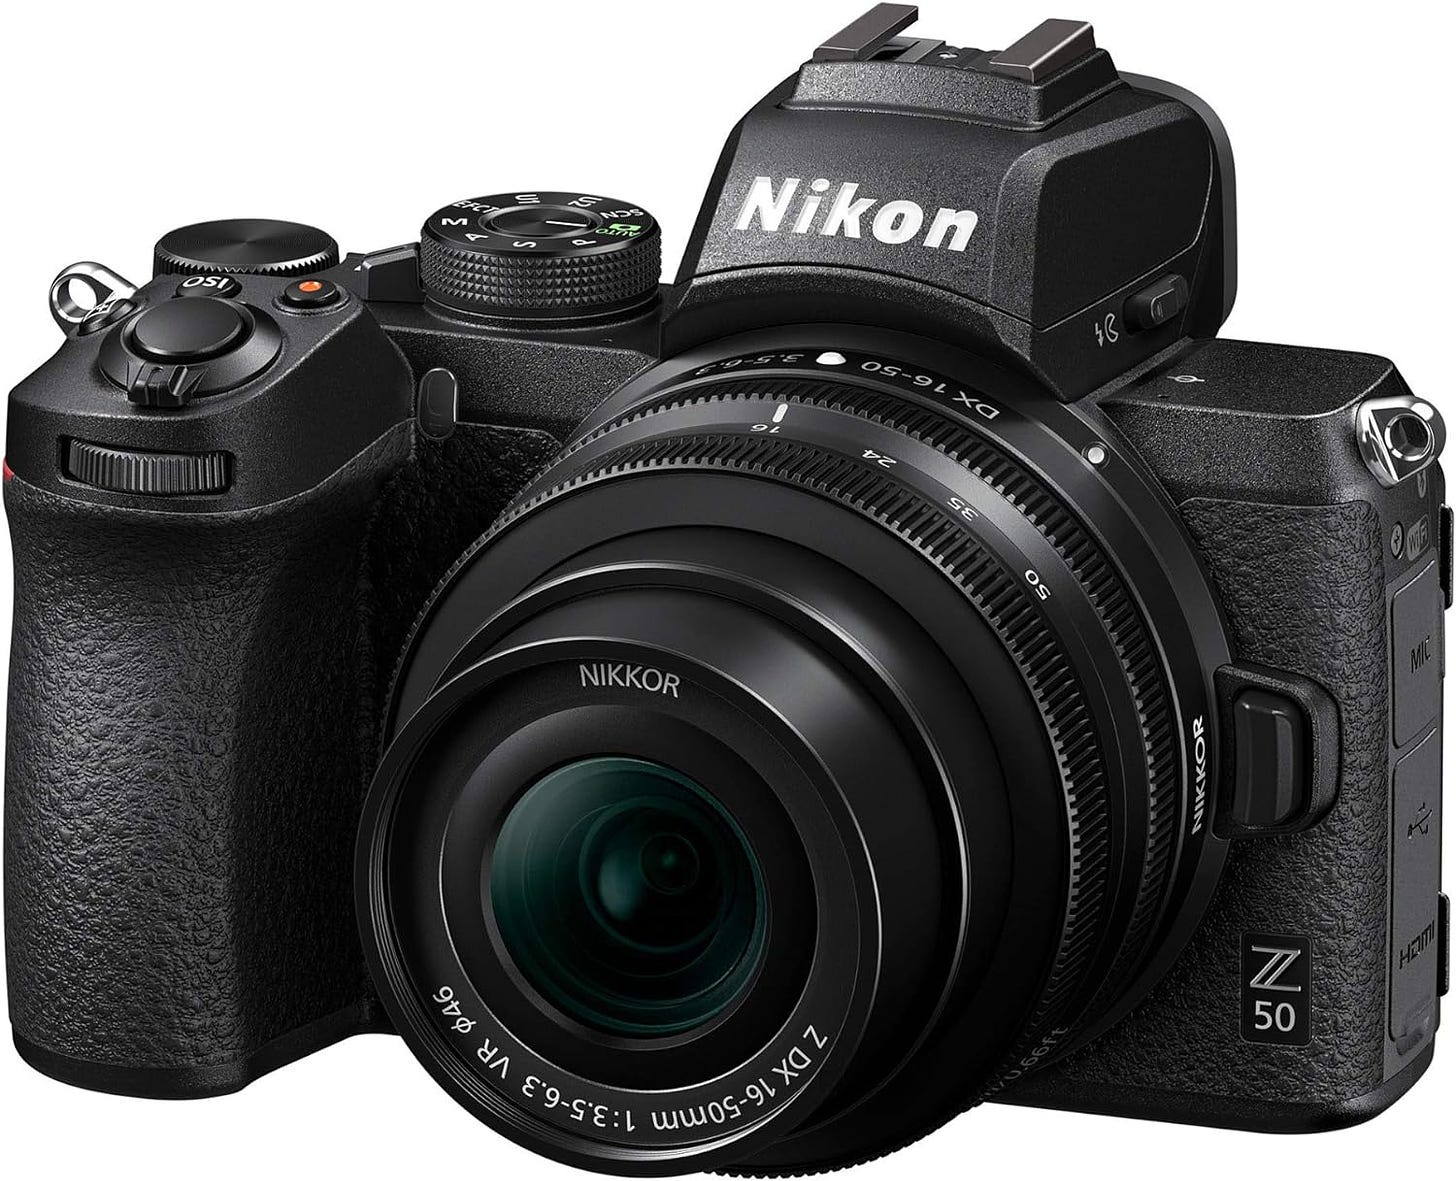 Nikon Z50 mirrorless camera for capturing golf swings